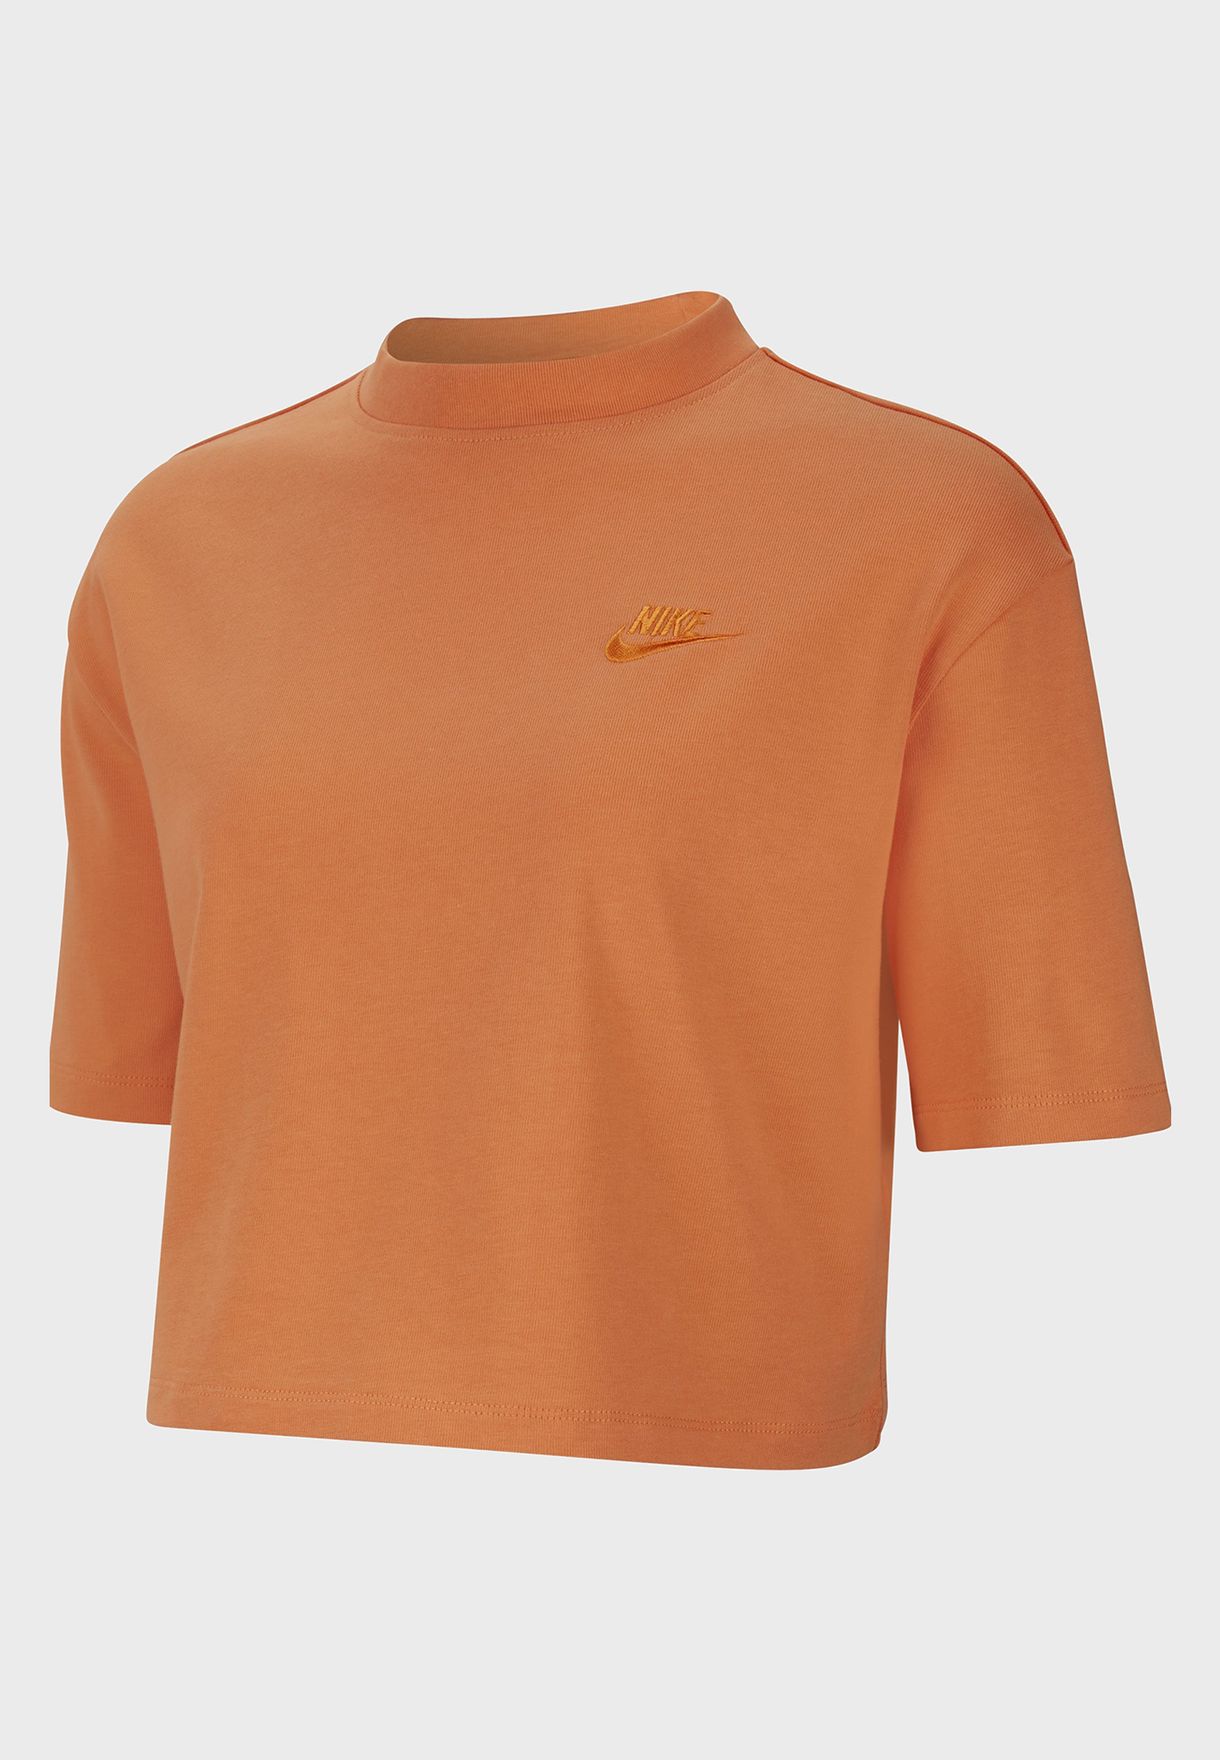 nike t shirt women's orange